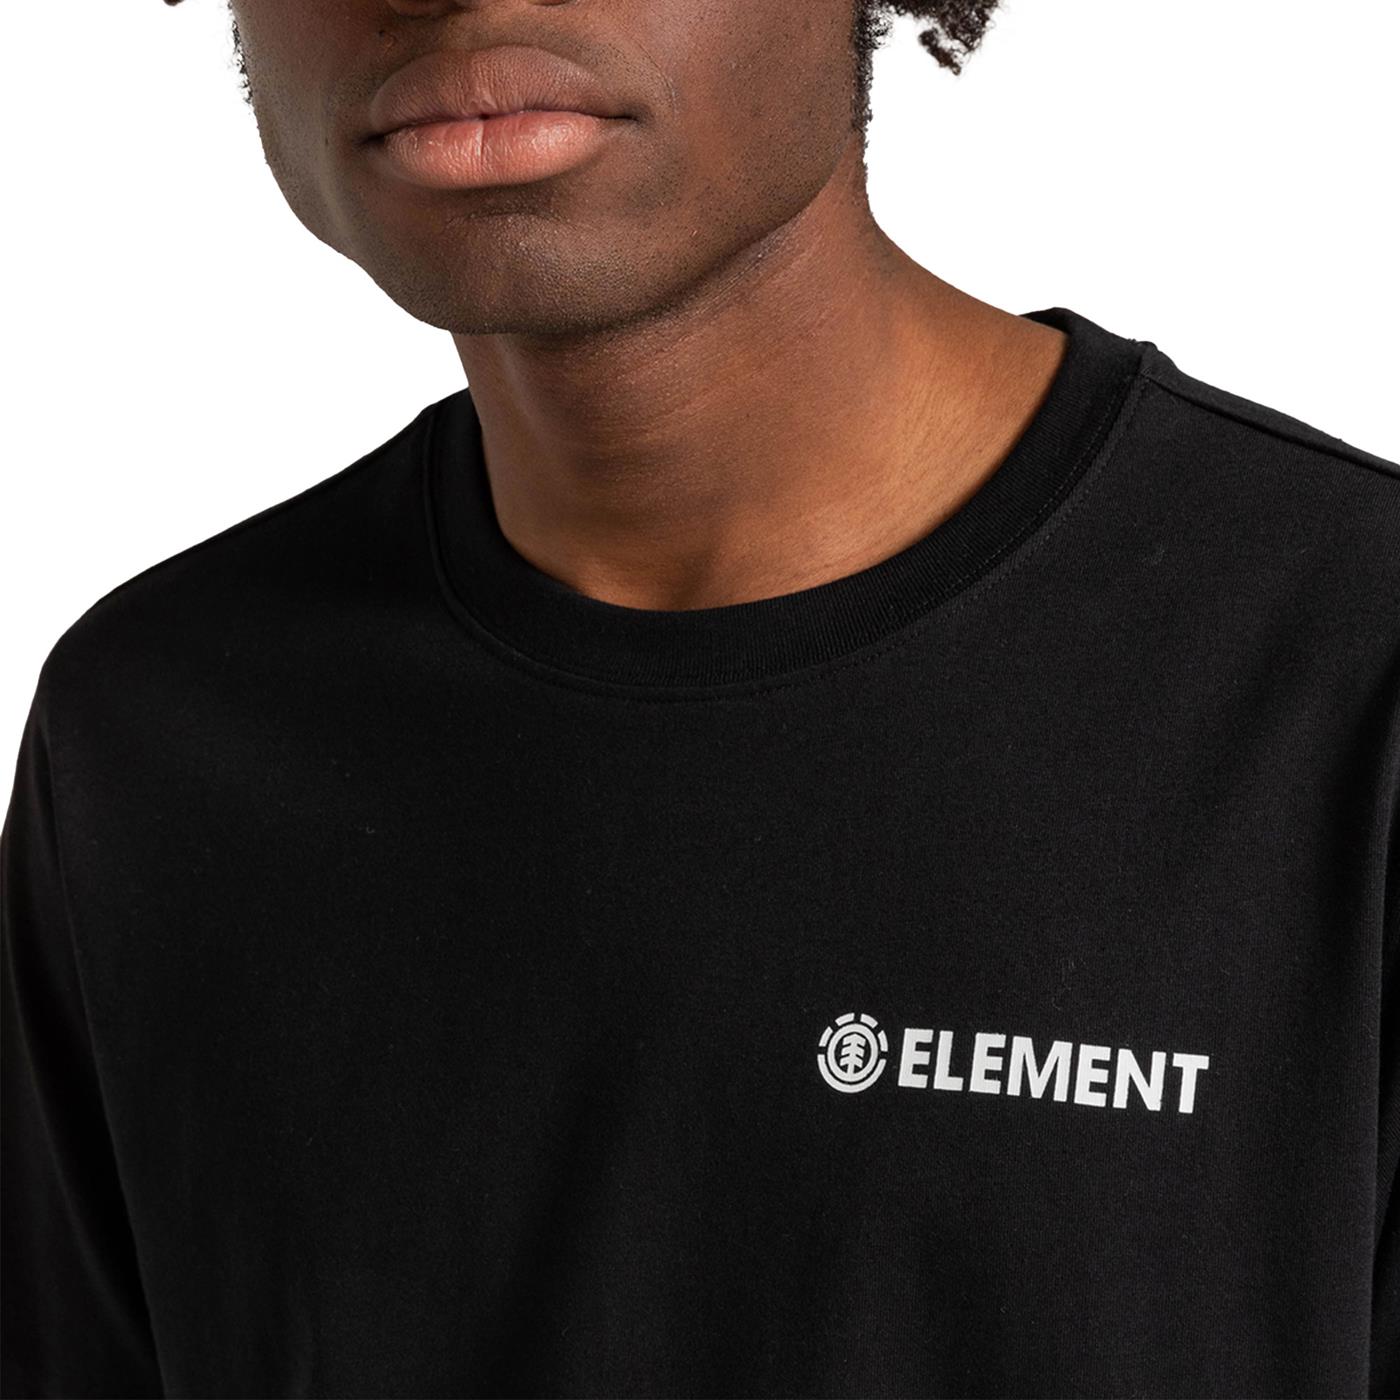 Element Men's Blazin Chest Short Sleeve Tee Shirt